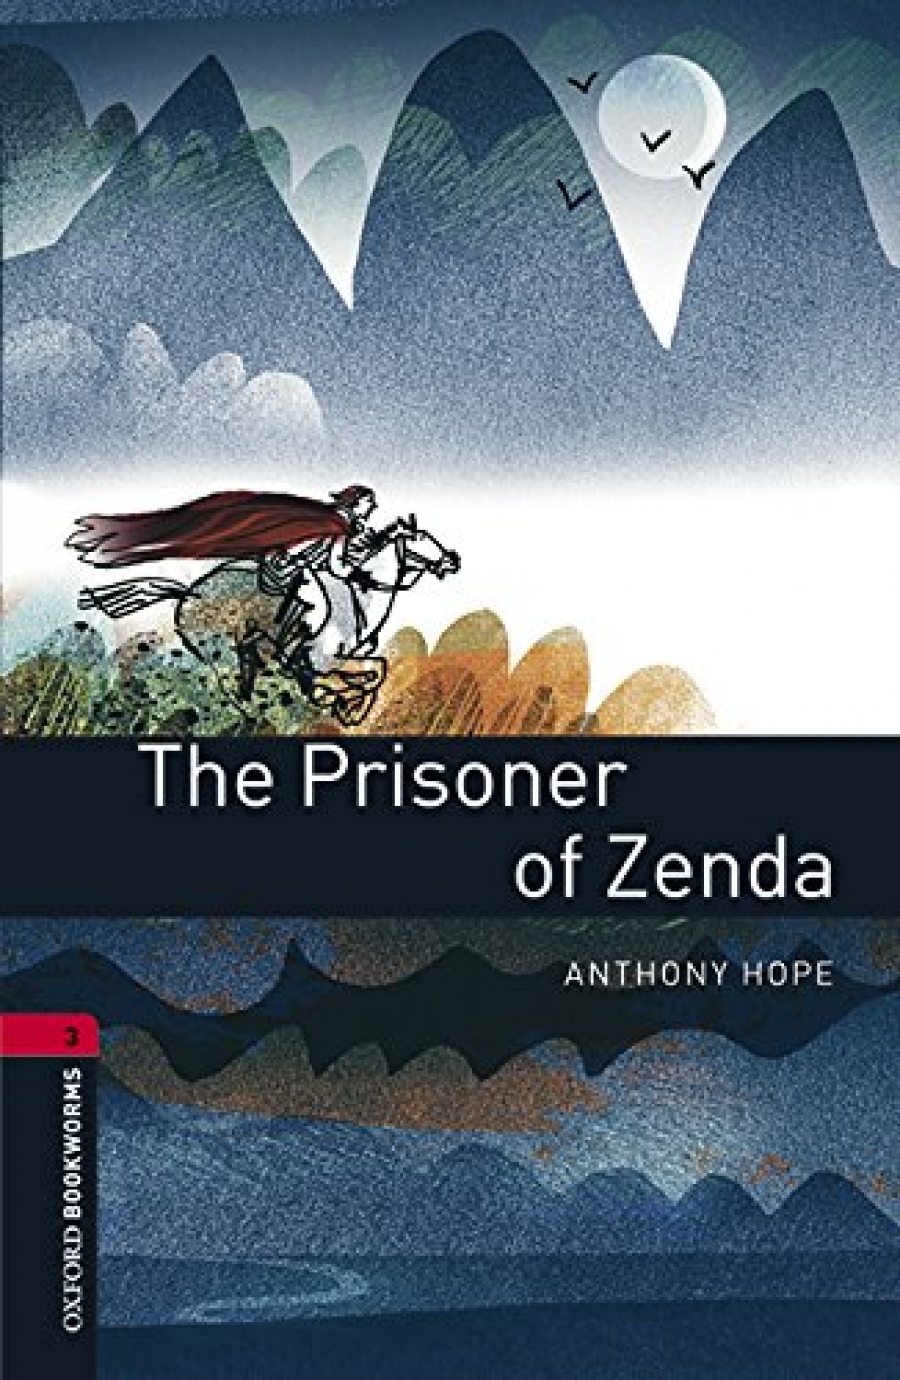 Anthony Hope OBL 3: The Prisoner of Zenda 